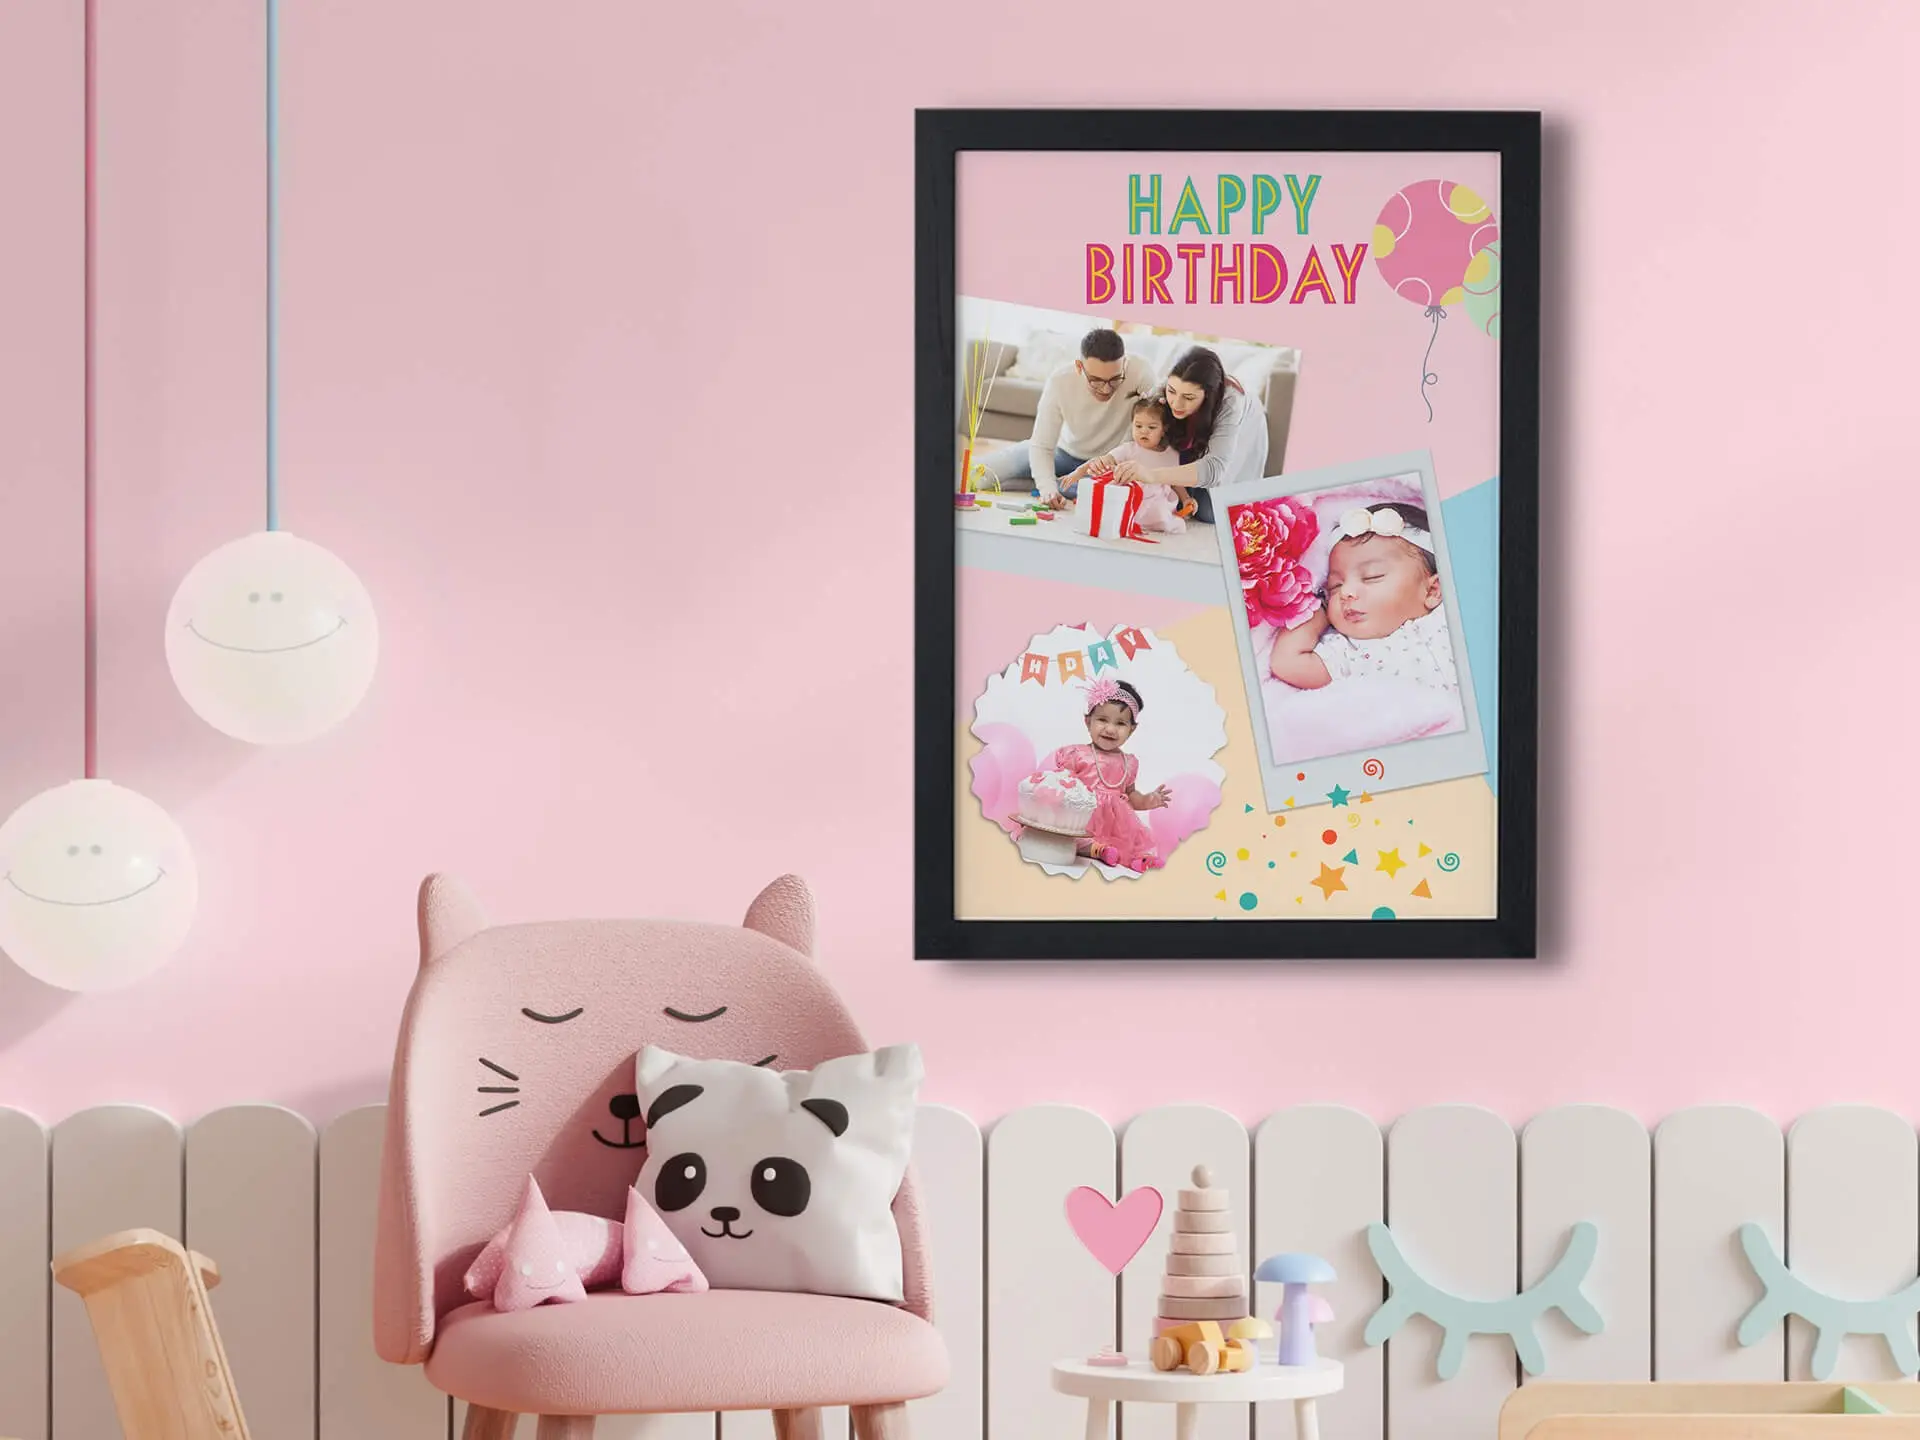 Personalized Happy Birthday Photo Frames